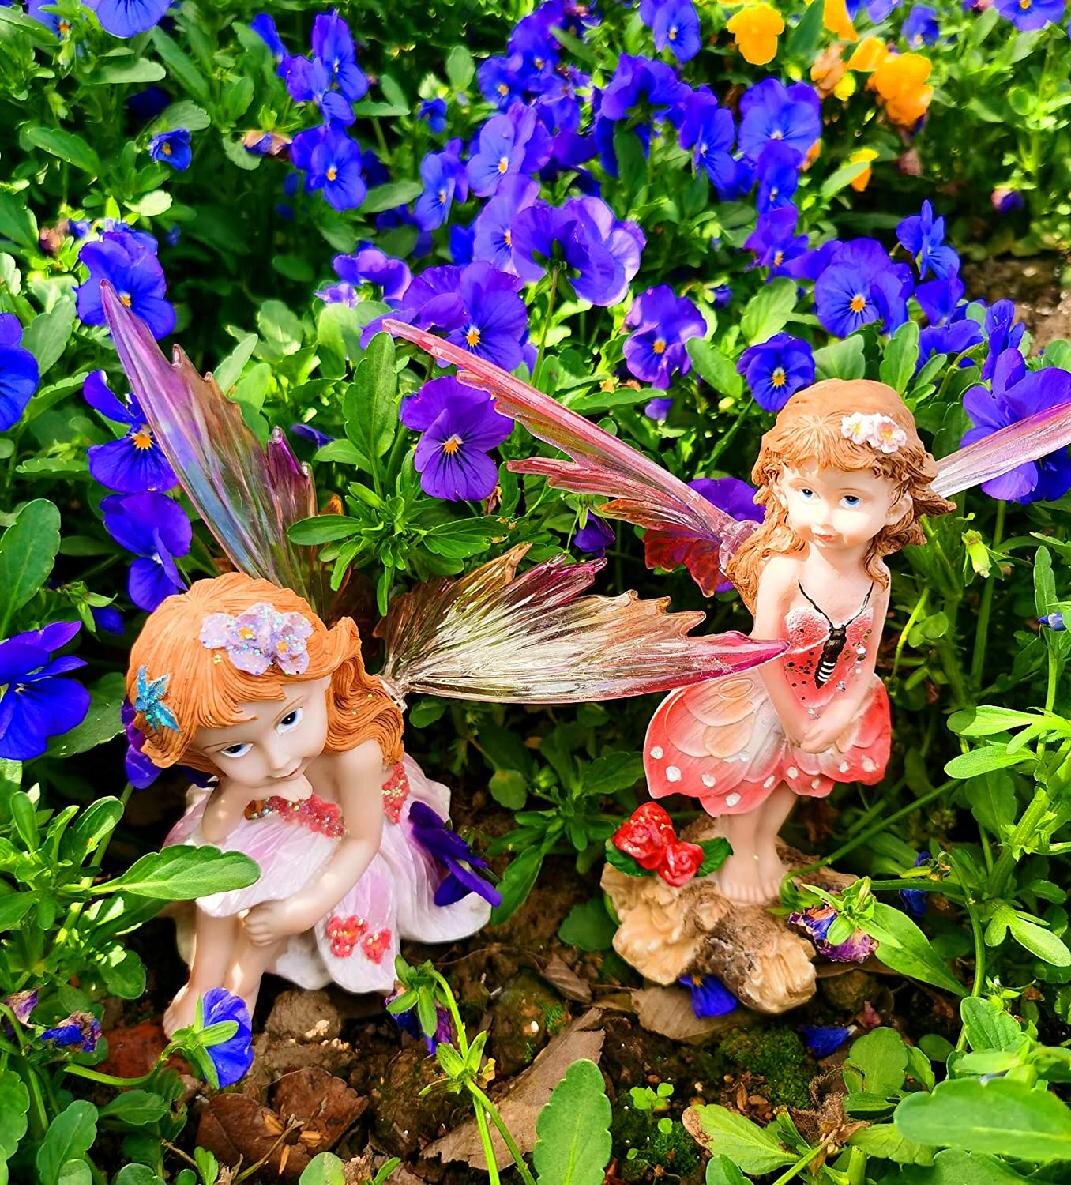 Fairy Garden Fairies Statue Angel Ornament Figurine Handmade Sitting Flower Fairy Beautiful Girl Figurines for Indoor & Outdoor Miniature Fairy Garden Holiday Ornaments Gift for Girls Kids Adults 